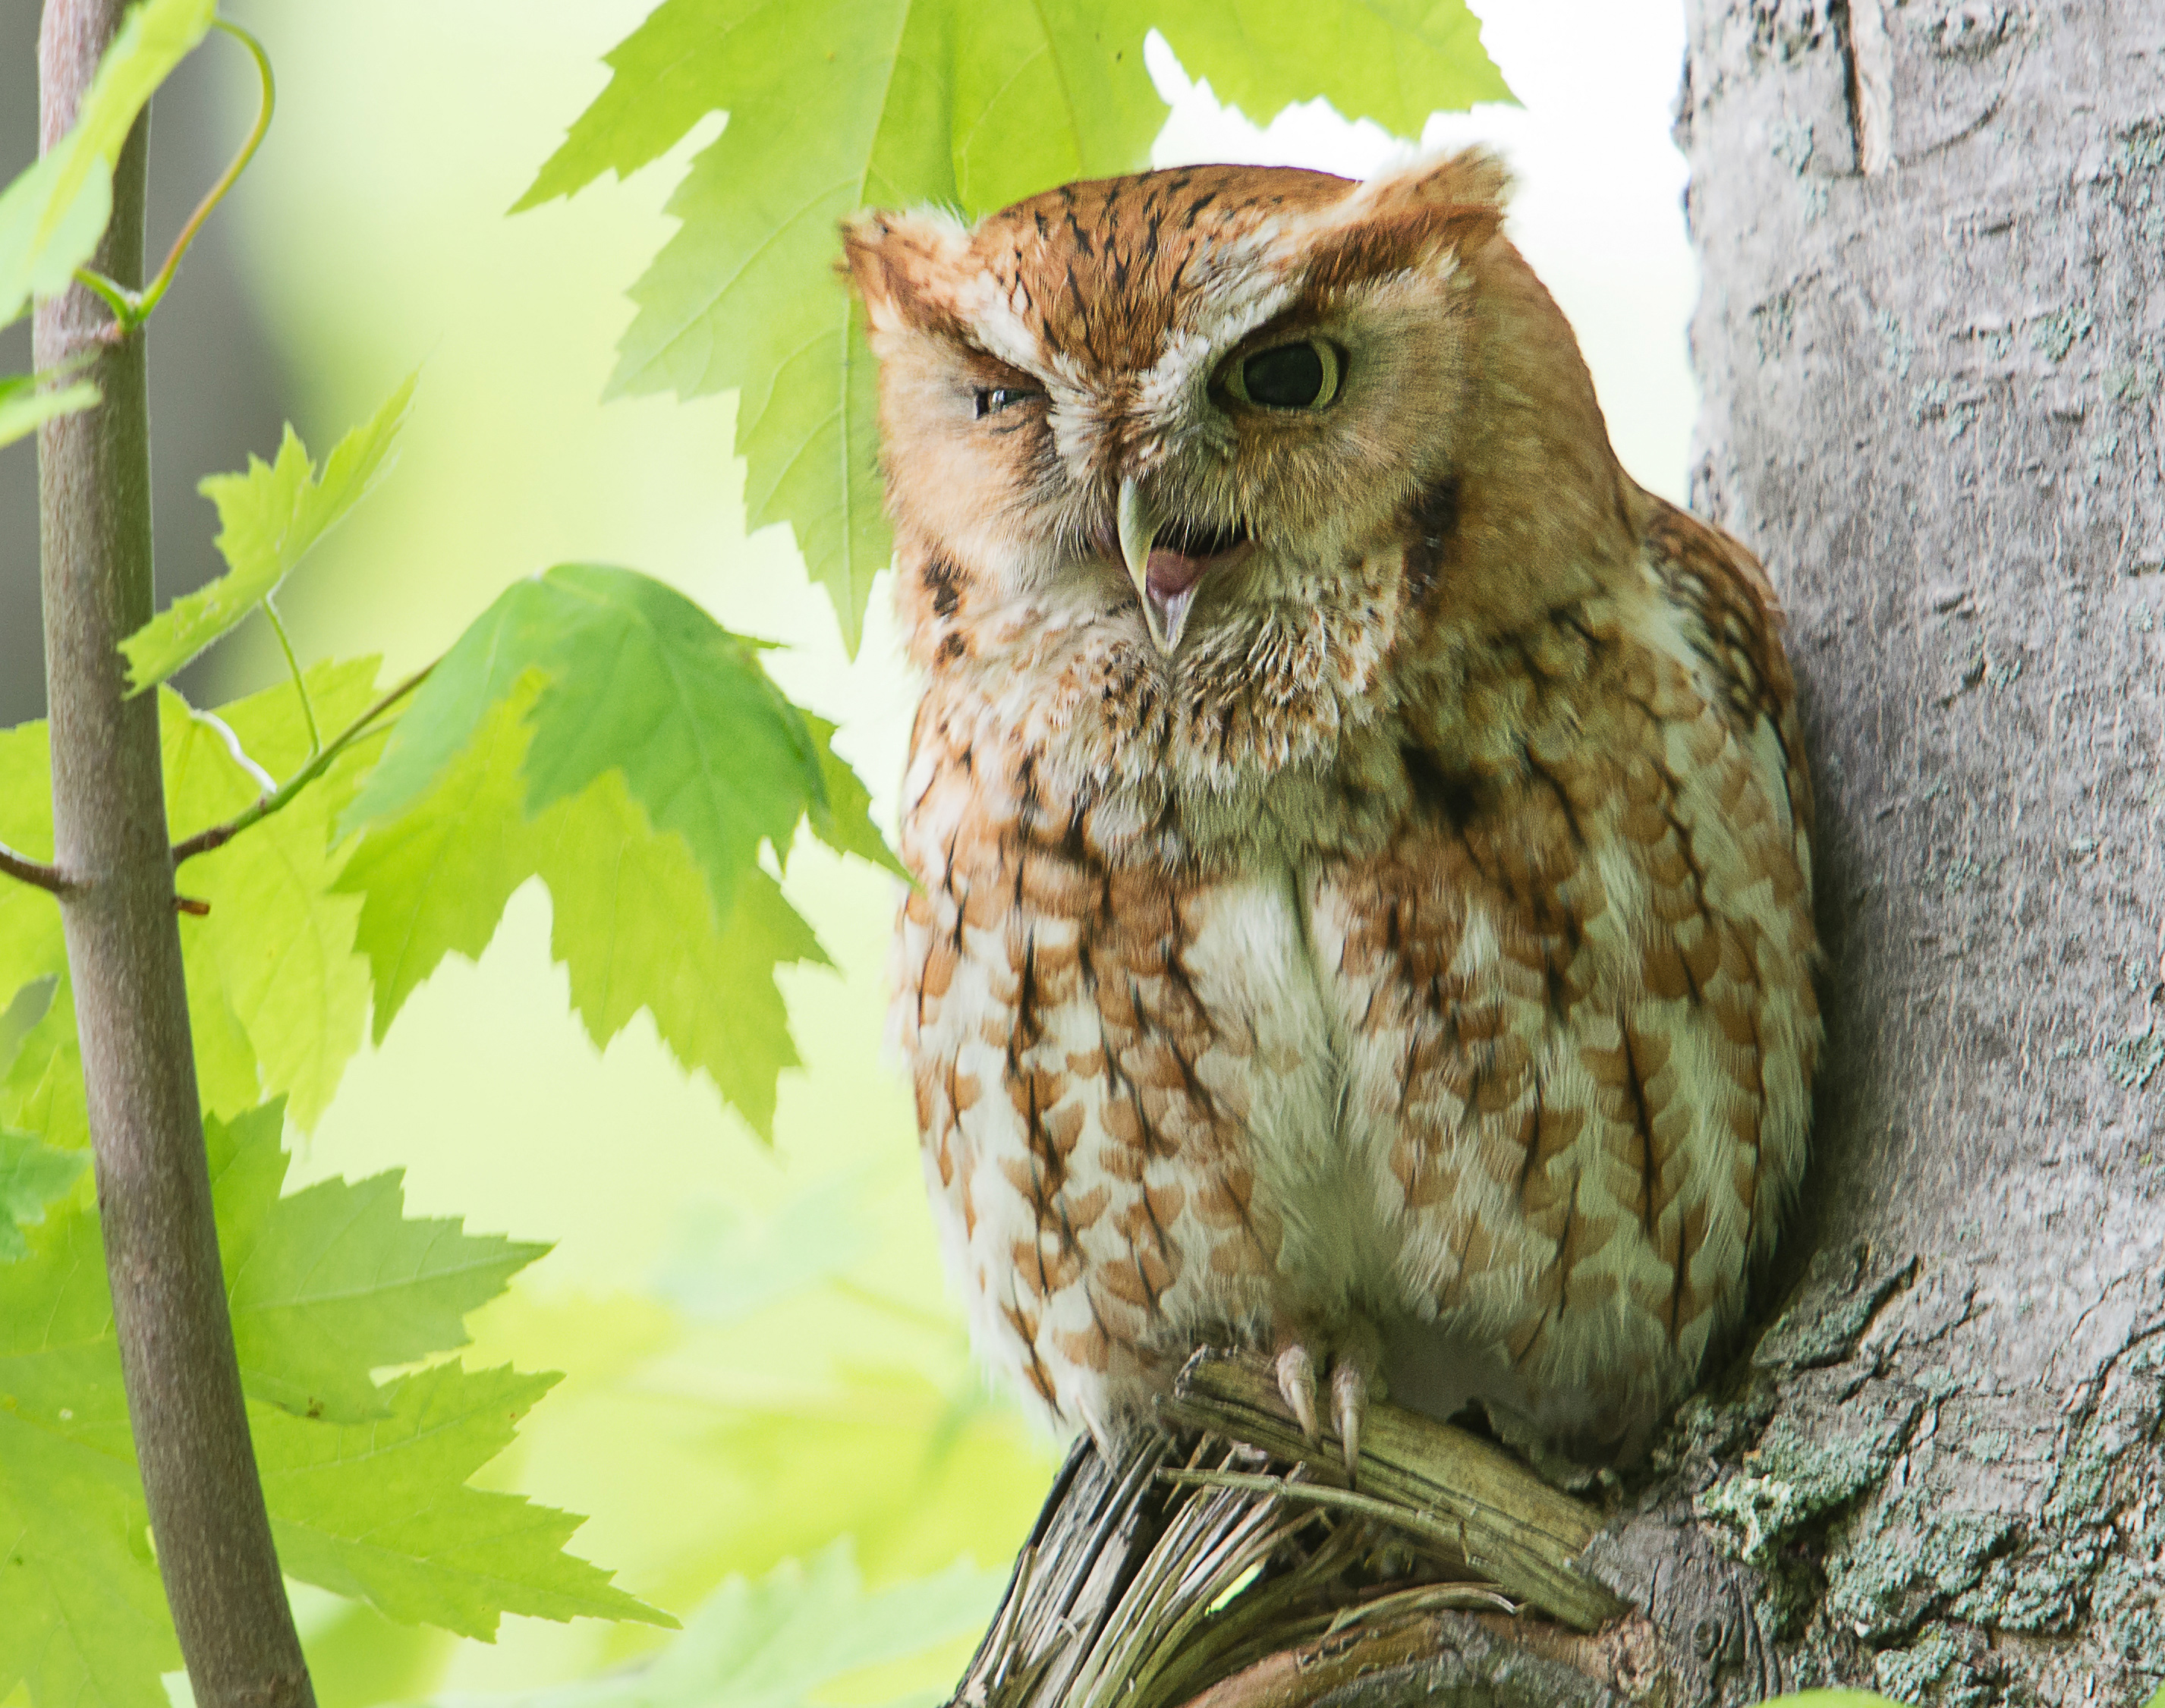 A screech owl yawns in a tree.